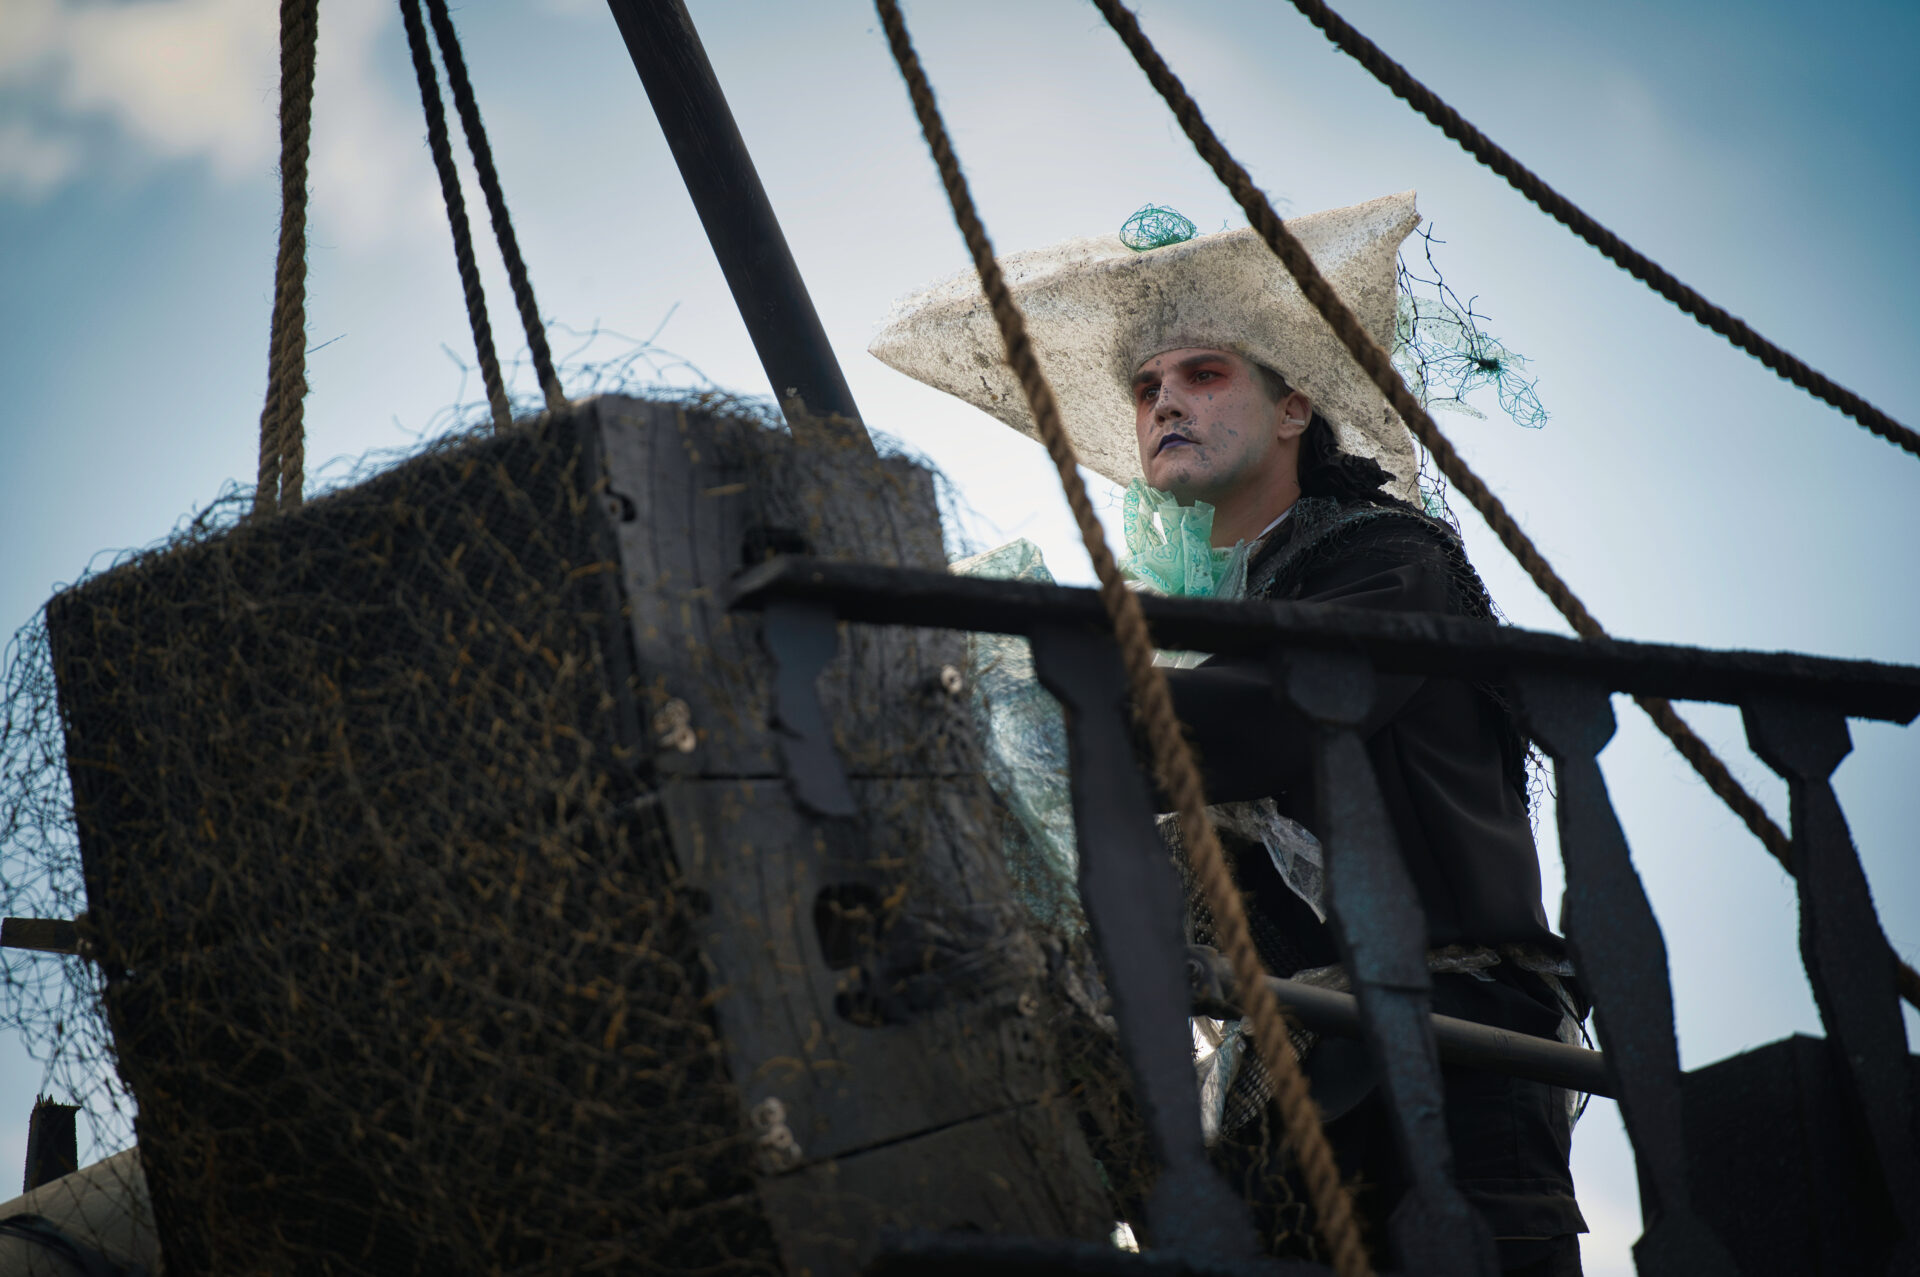 brabantsedag Heeze pirate piraat plastic ship steer wheel